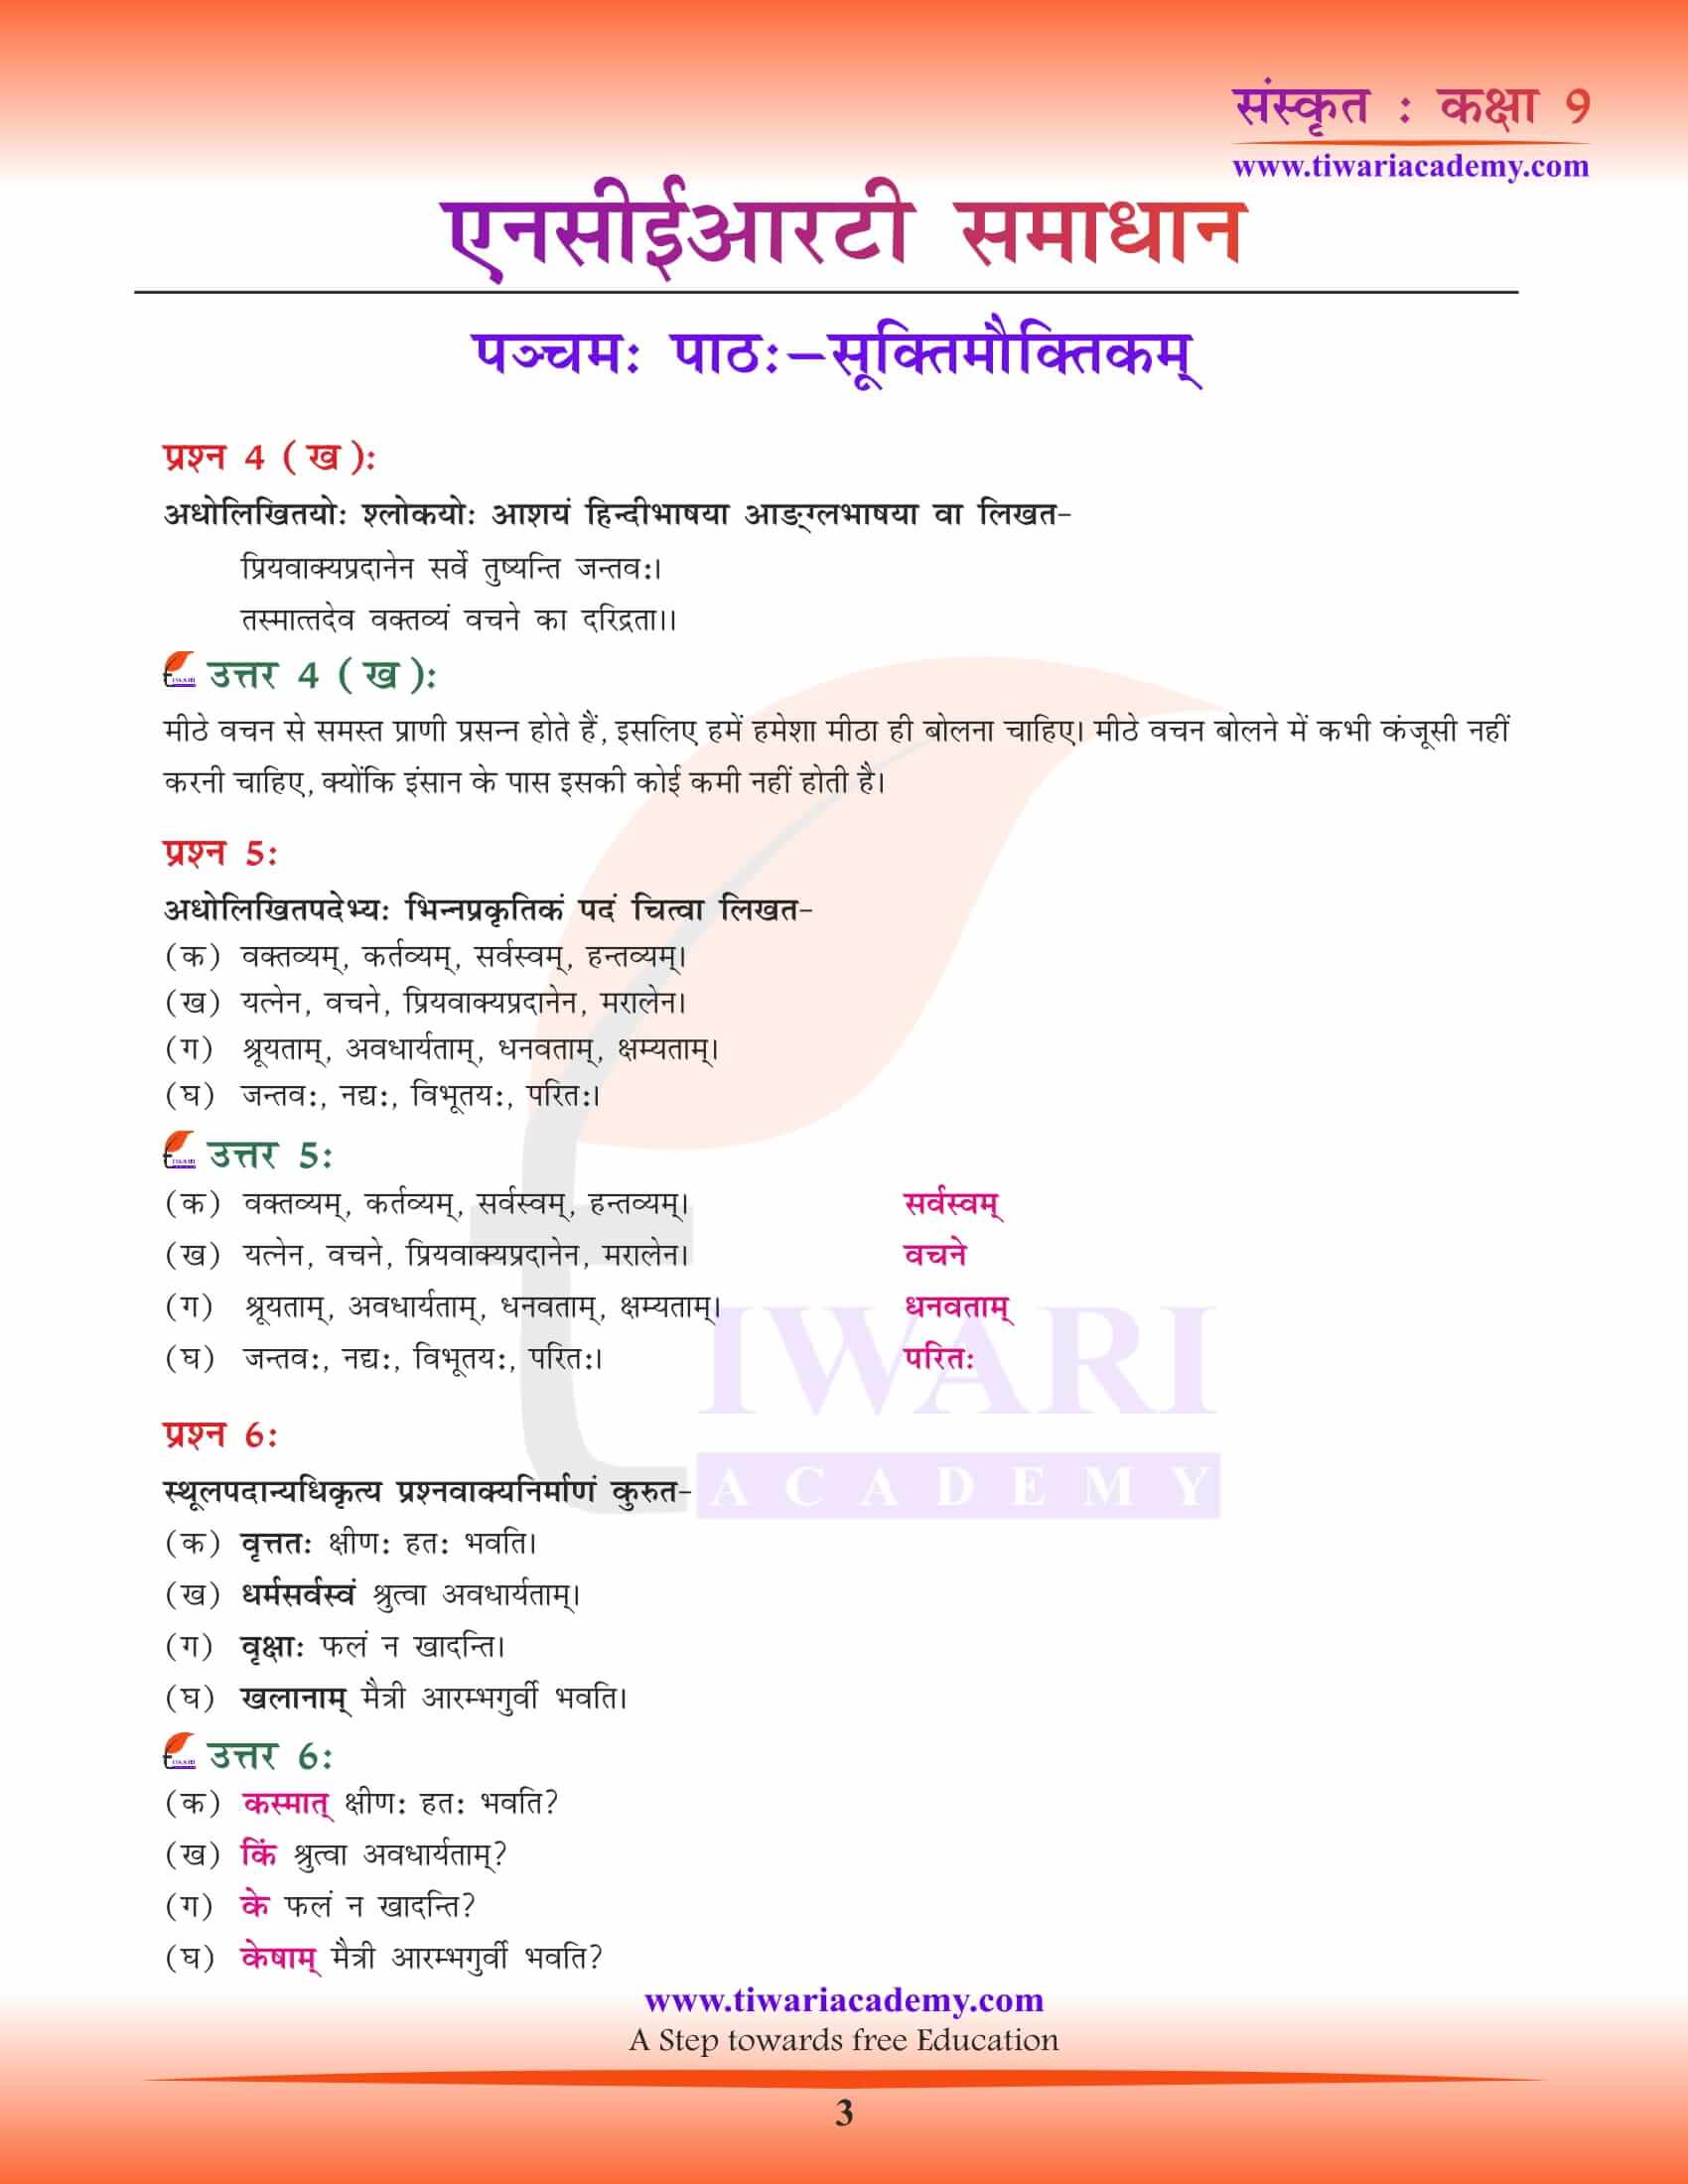 NCERT Solutions for Class 9 Sanskrit Chapter 5 free download